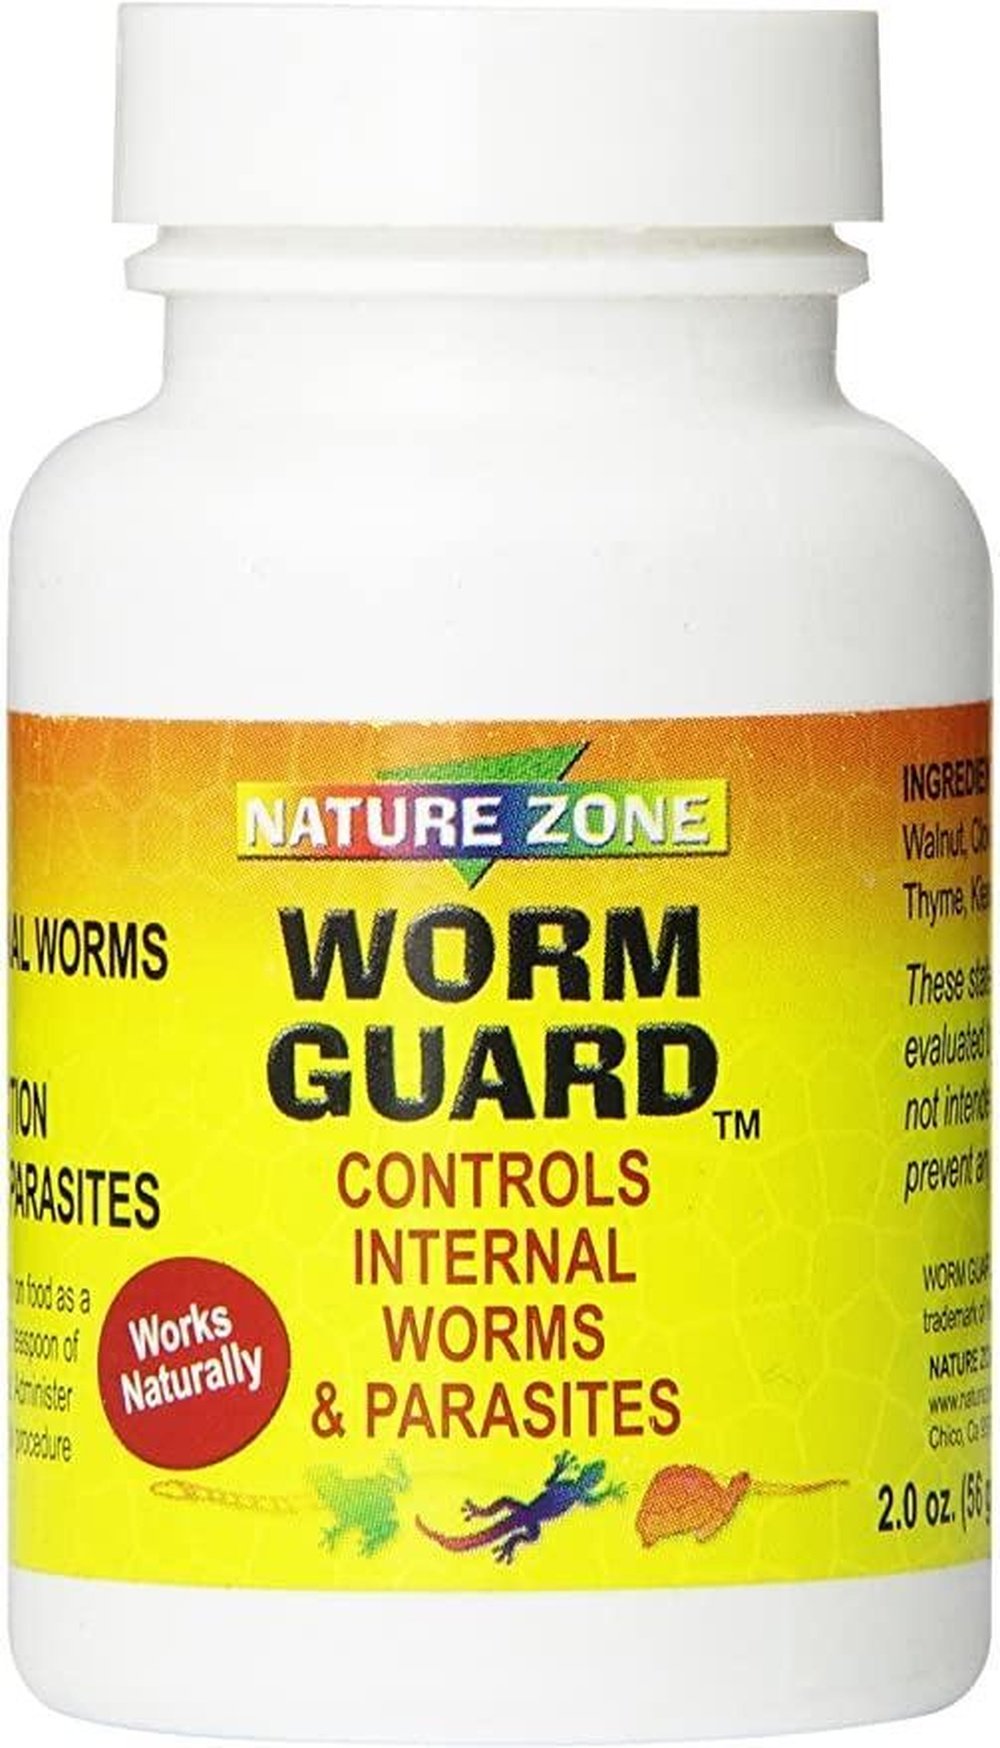 Natural zones. Worm Guard.